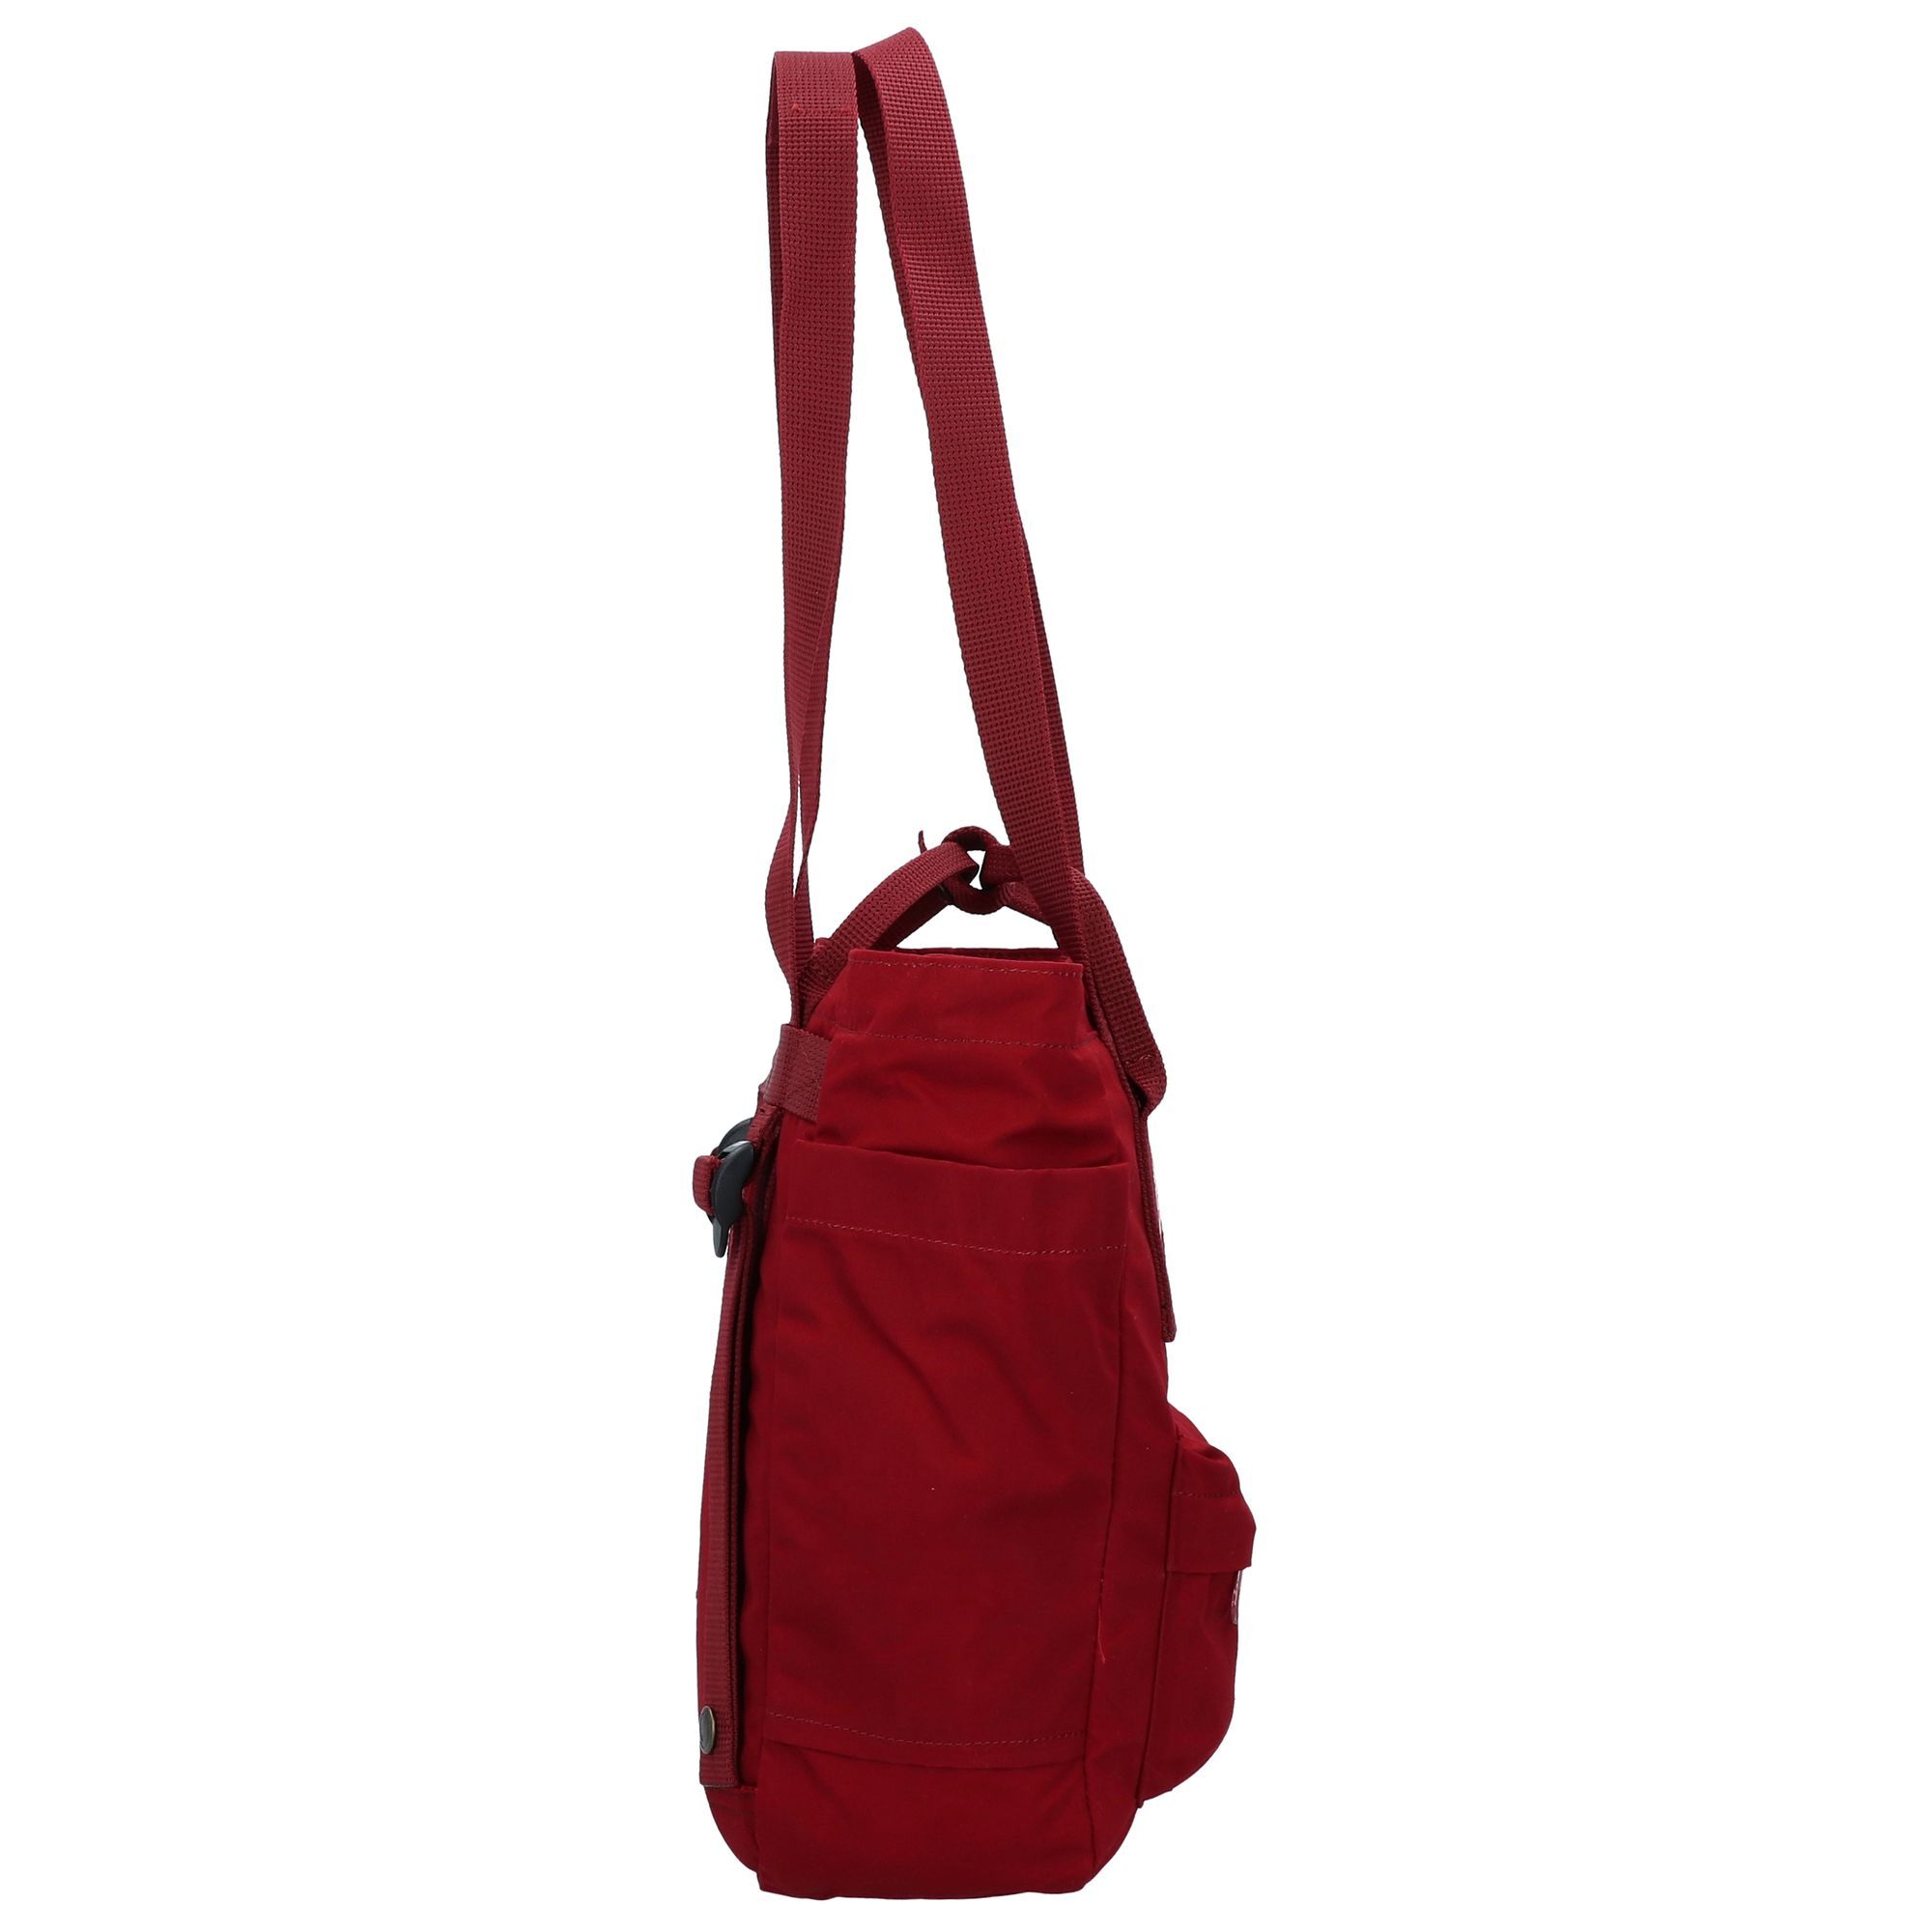 Сумка через плечо FJÄLLRÄVEN Kanken Mini 23 cm, цвет ox red большая сумка конкен fjällräven цвет ox red